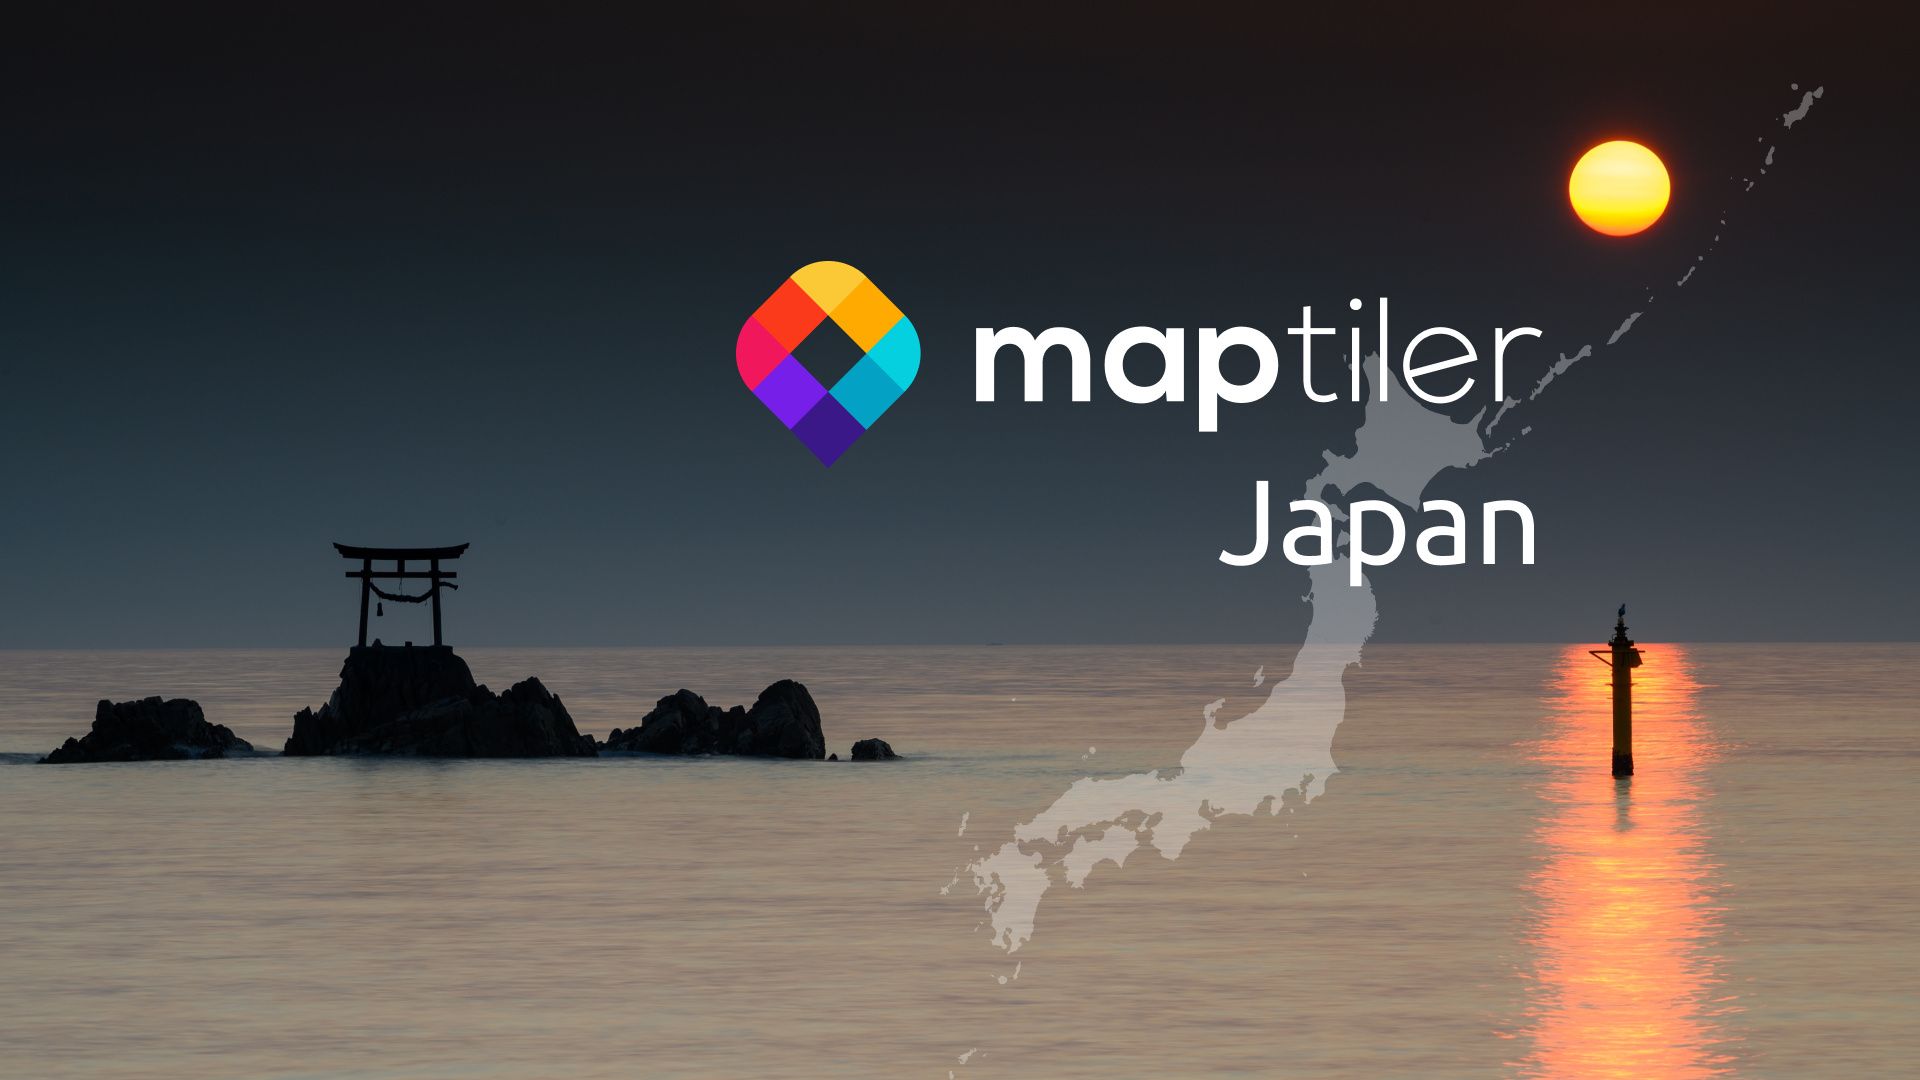 MapTiler Japan - maps for companies